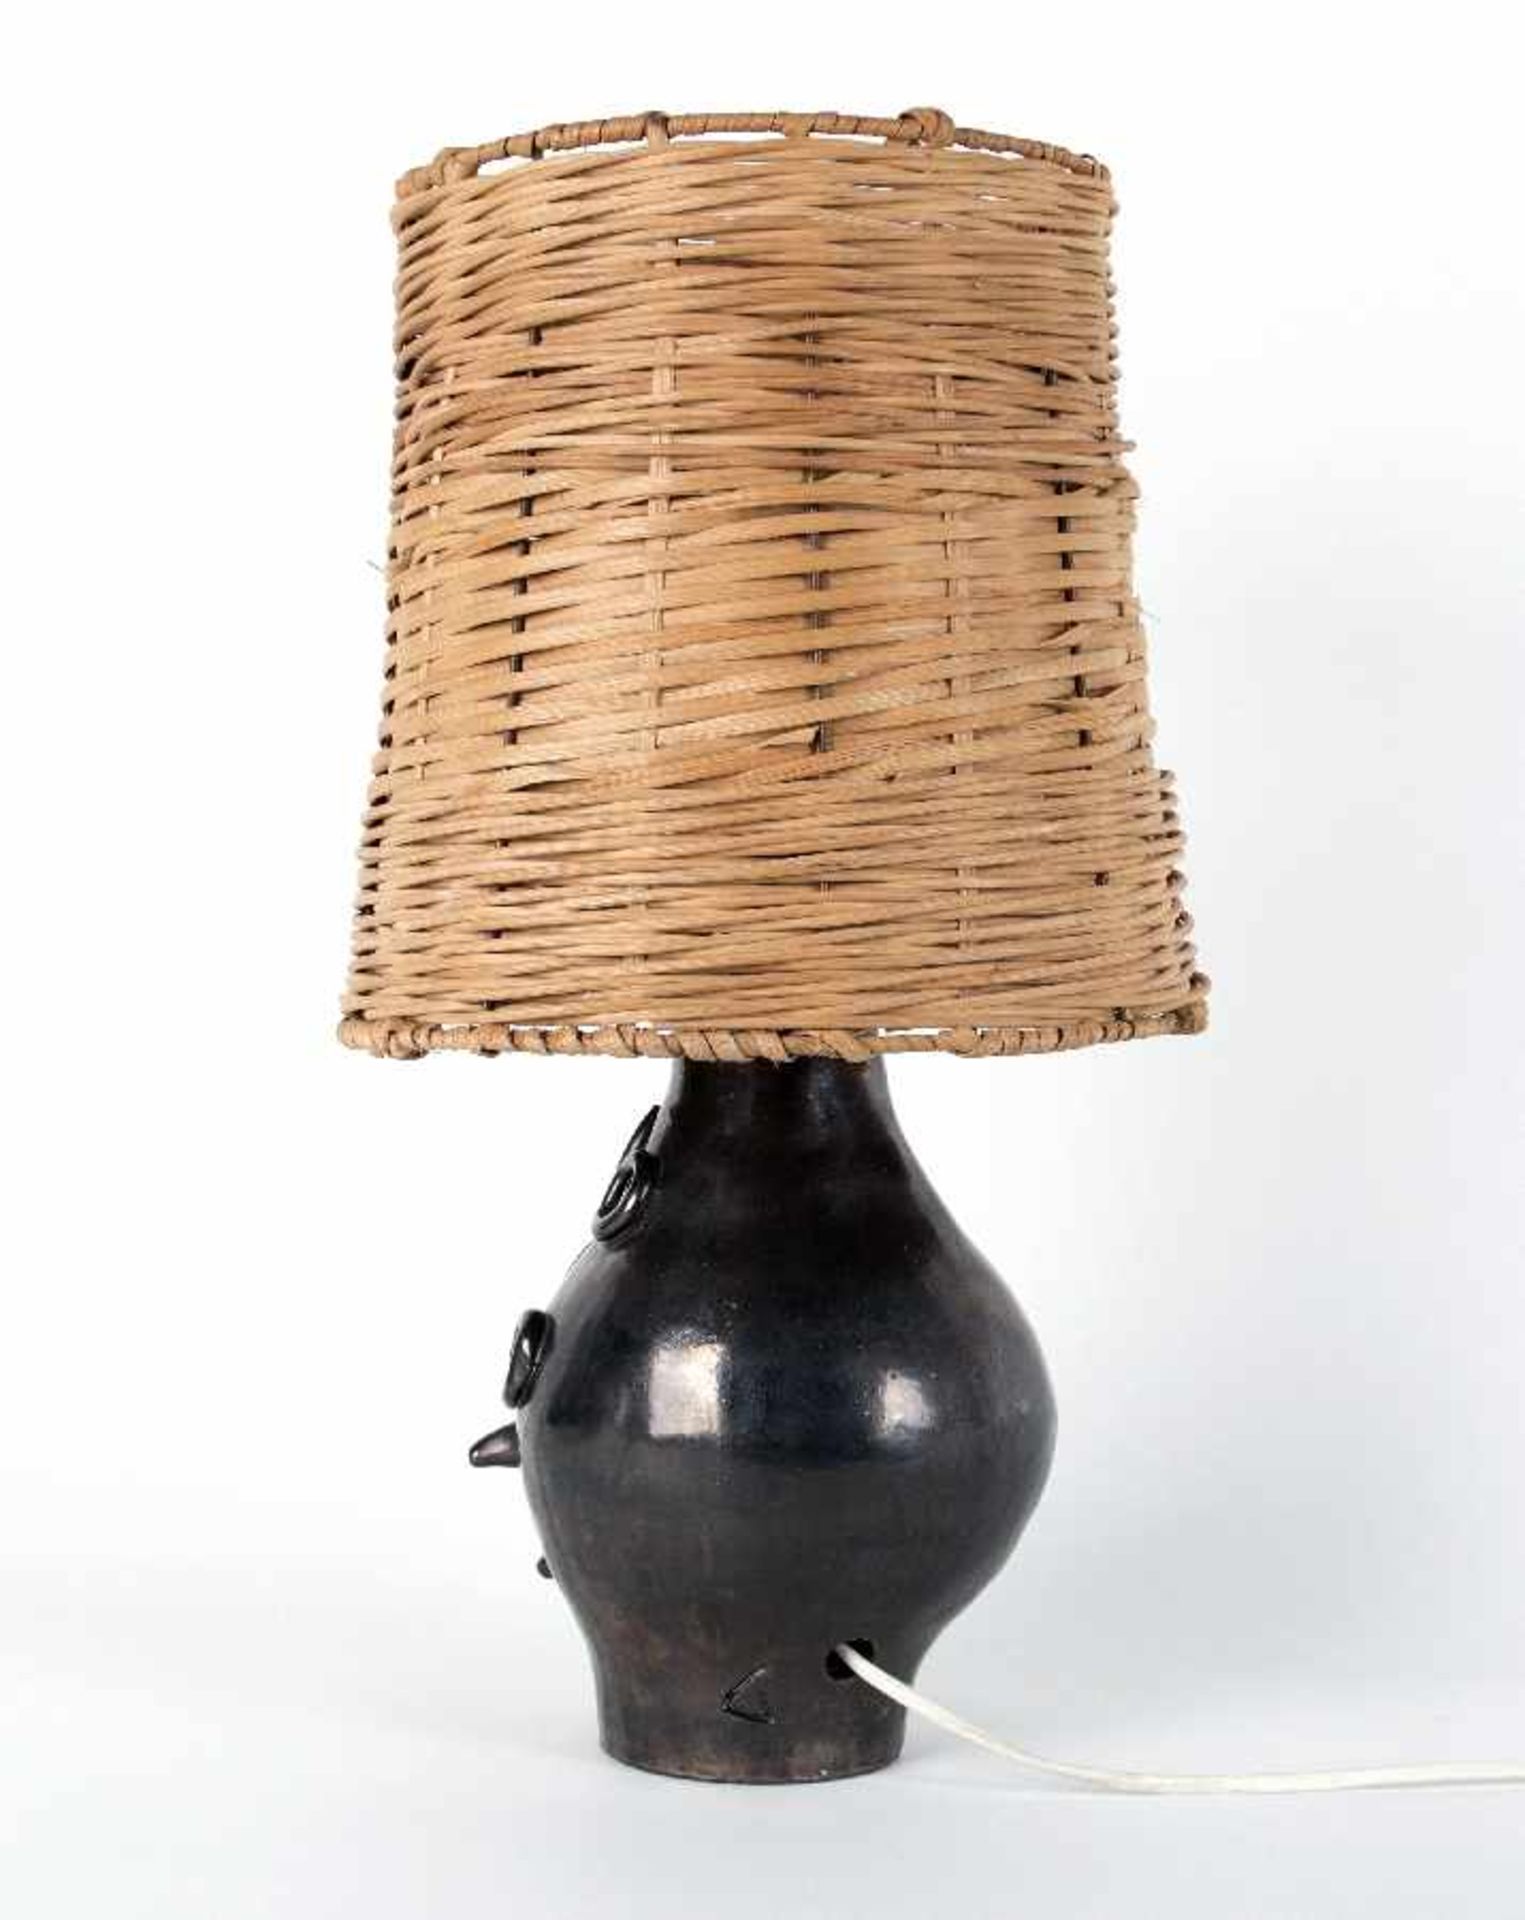 Georges Jouve UmkreisPied de lampe forme de PoissonKeramik, schwarz gefasst, mit originalem - Image 2 of 2